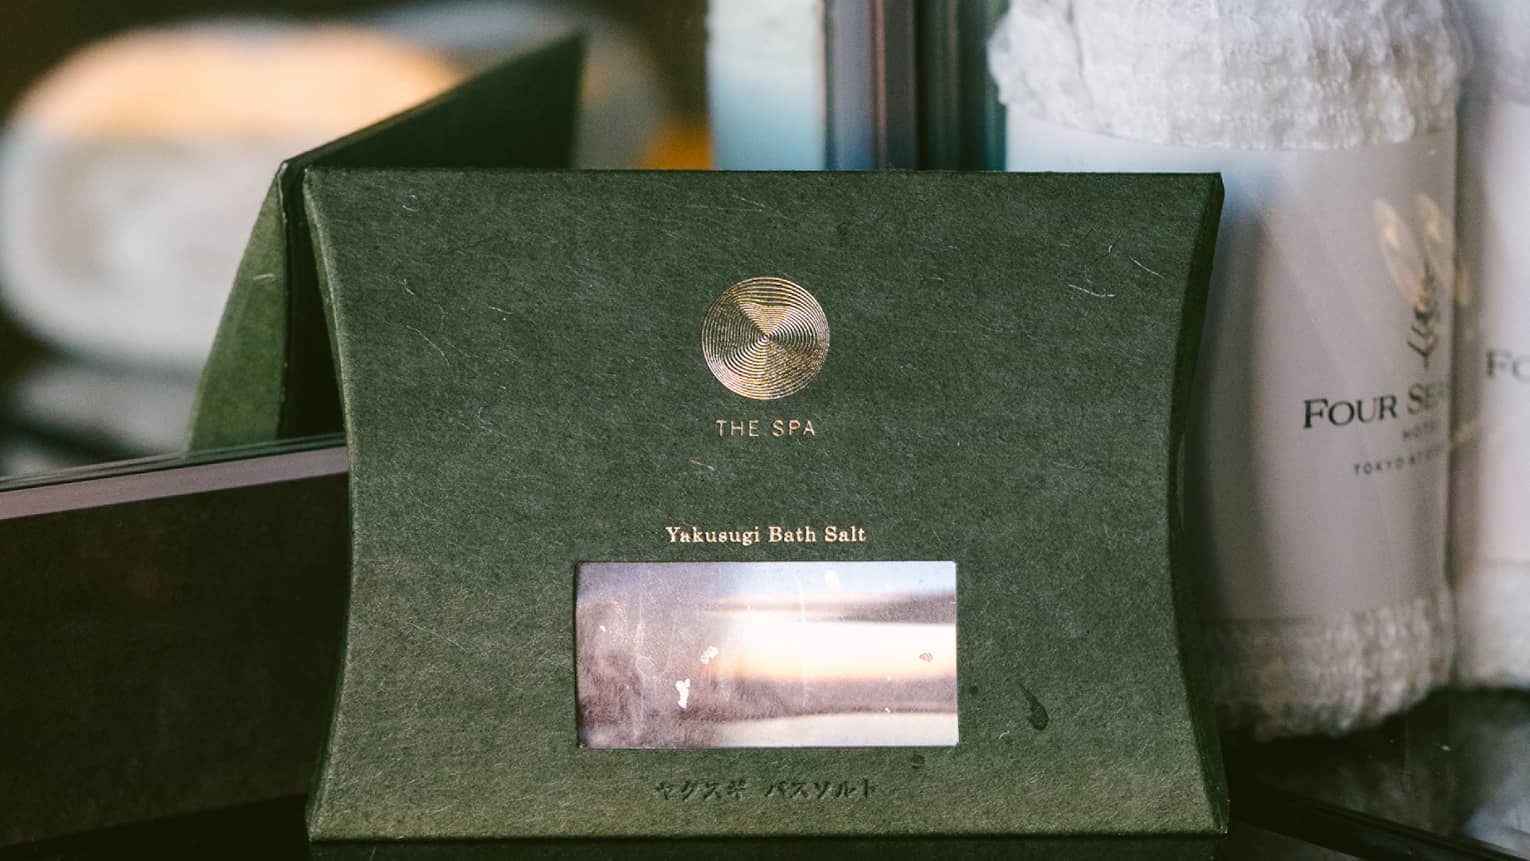 Yakusugi bath salts in green box with silver foil seal